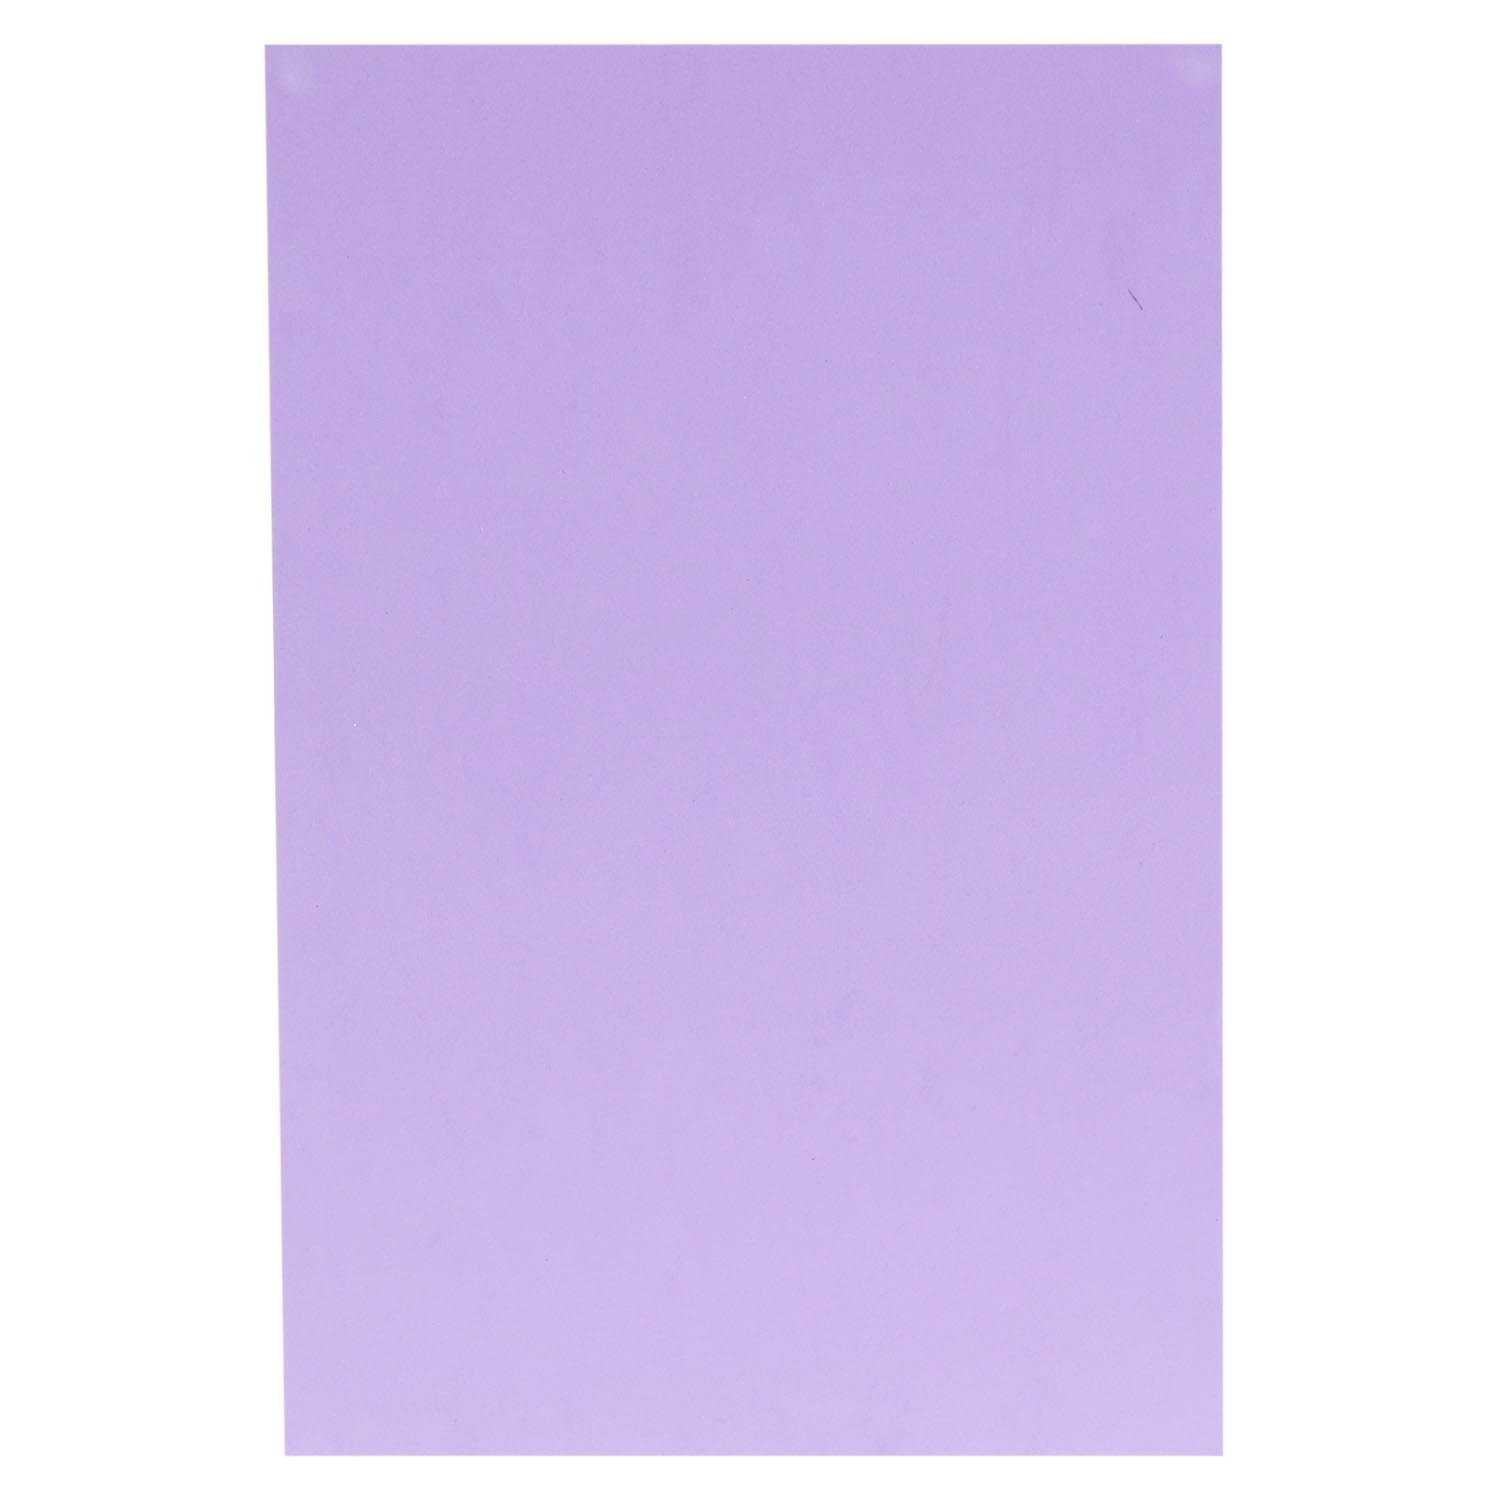 Foam Sheet - Light Pink Image 1